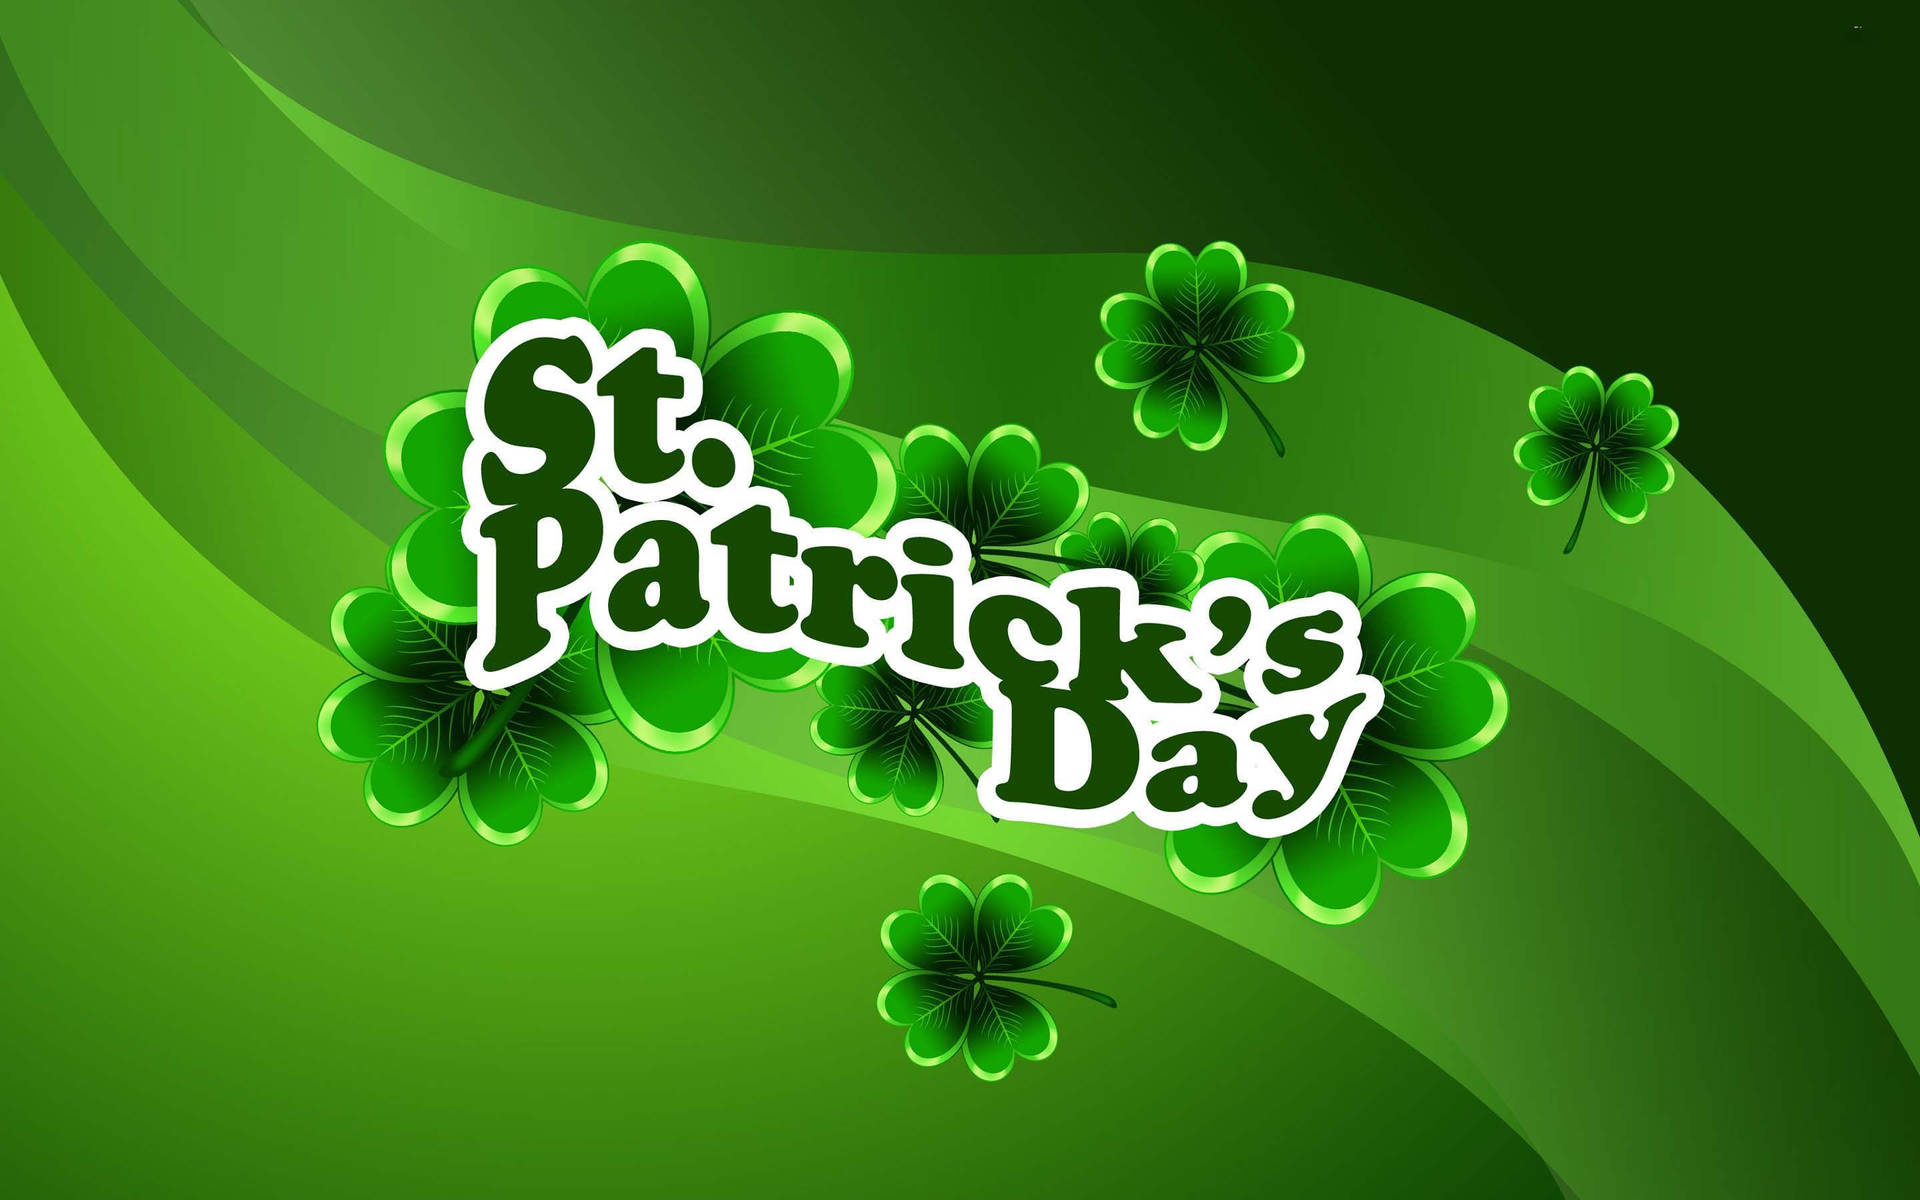 Happy St Patricks Day Background Vector Illustration Shamrock Leaves On  Green Argyle Pattern Background Stock Illustration  Download Image Now   iStock